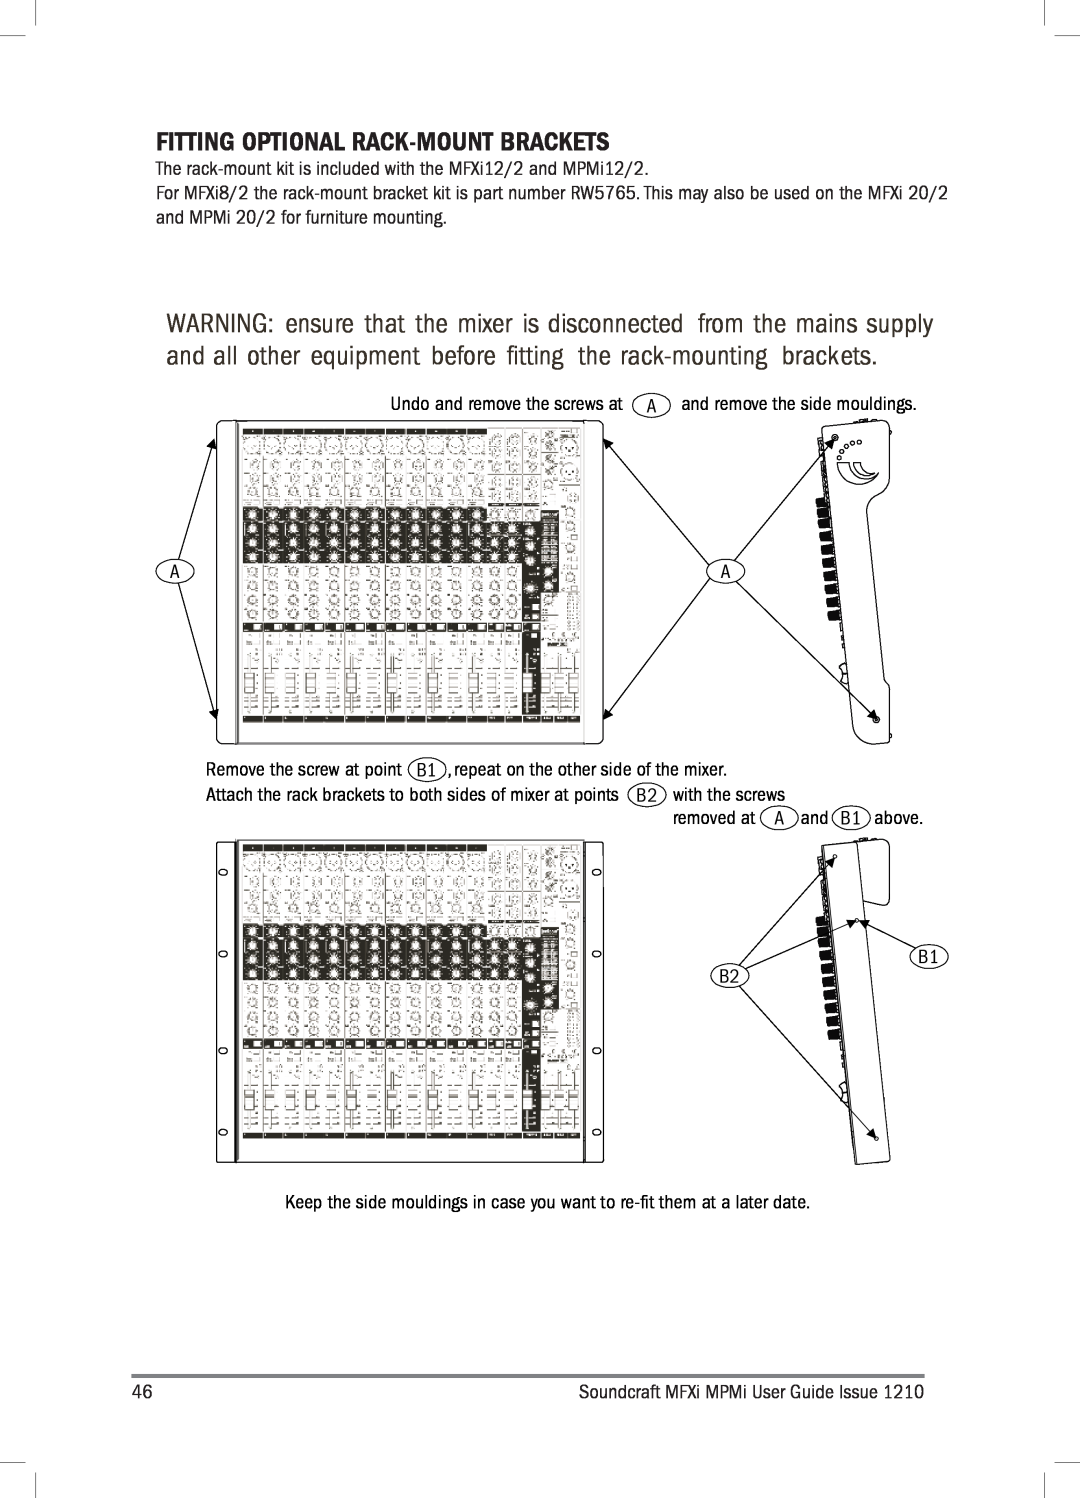 Harman MPMI, MFXI manual Fitting Optional Rack-Mount Brackets 